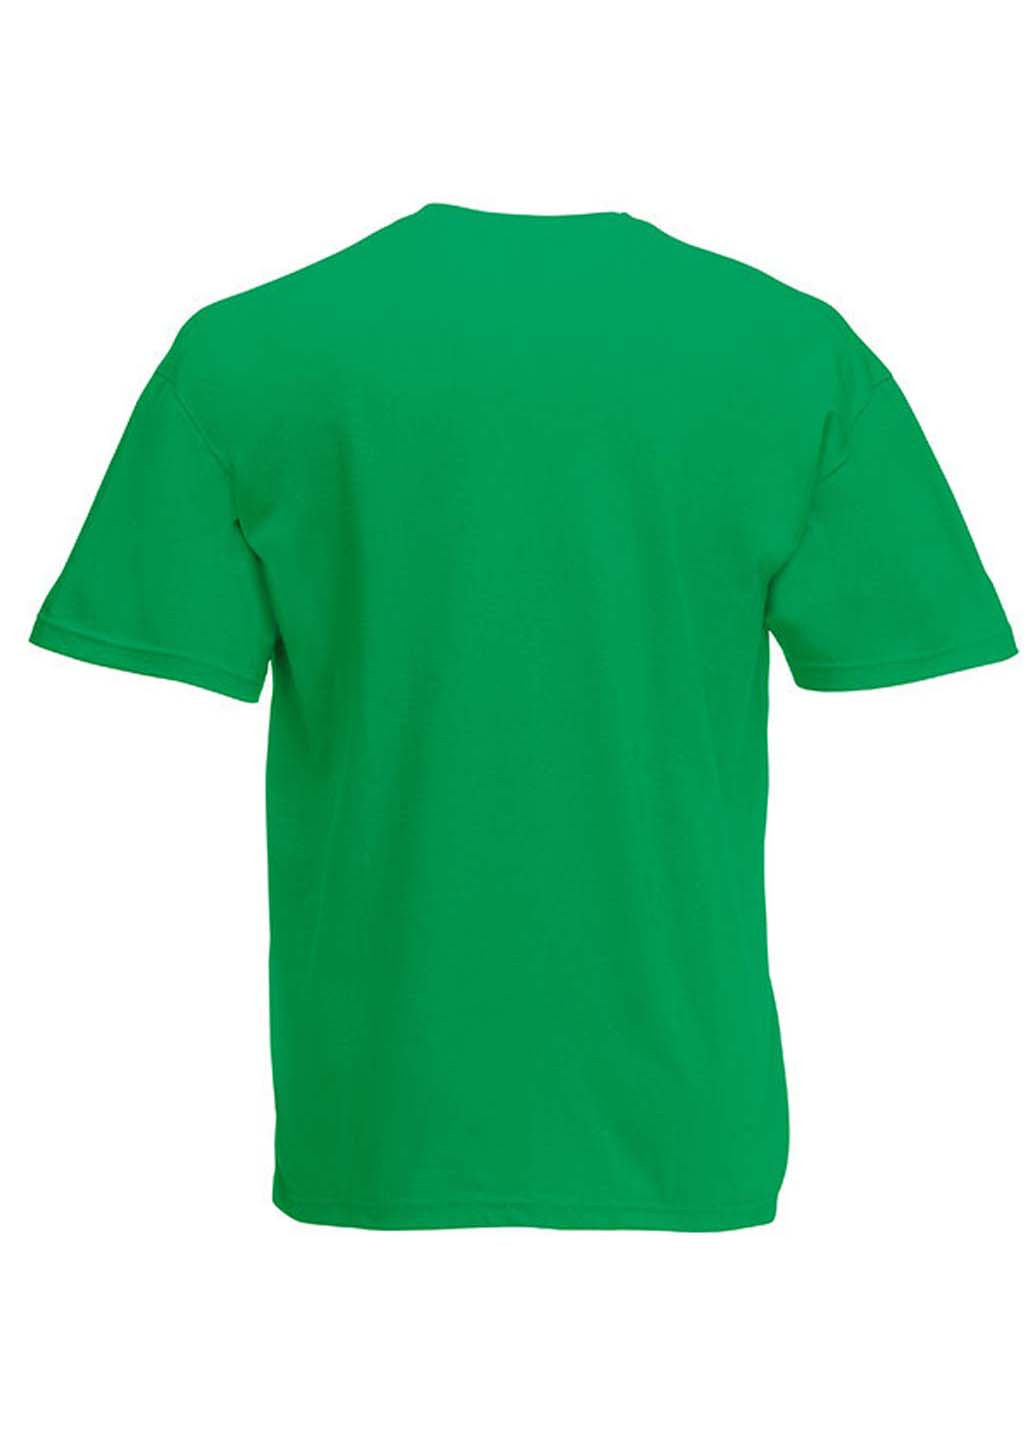 Зеленая футболка Fruit of the Loom ValueWeight